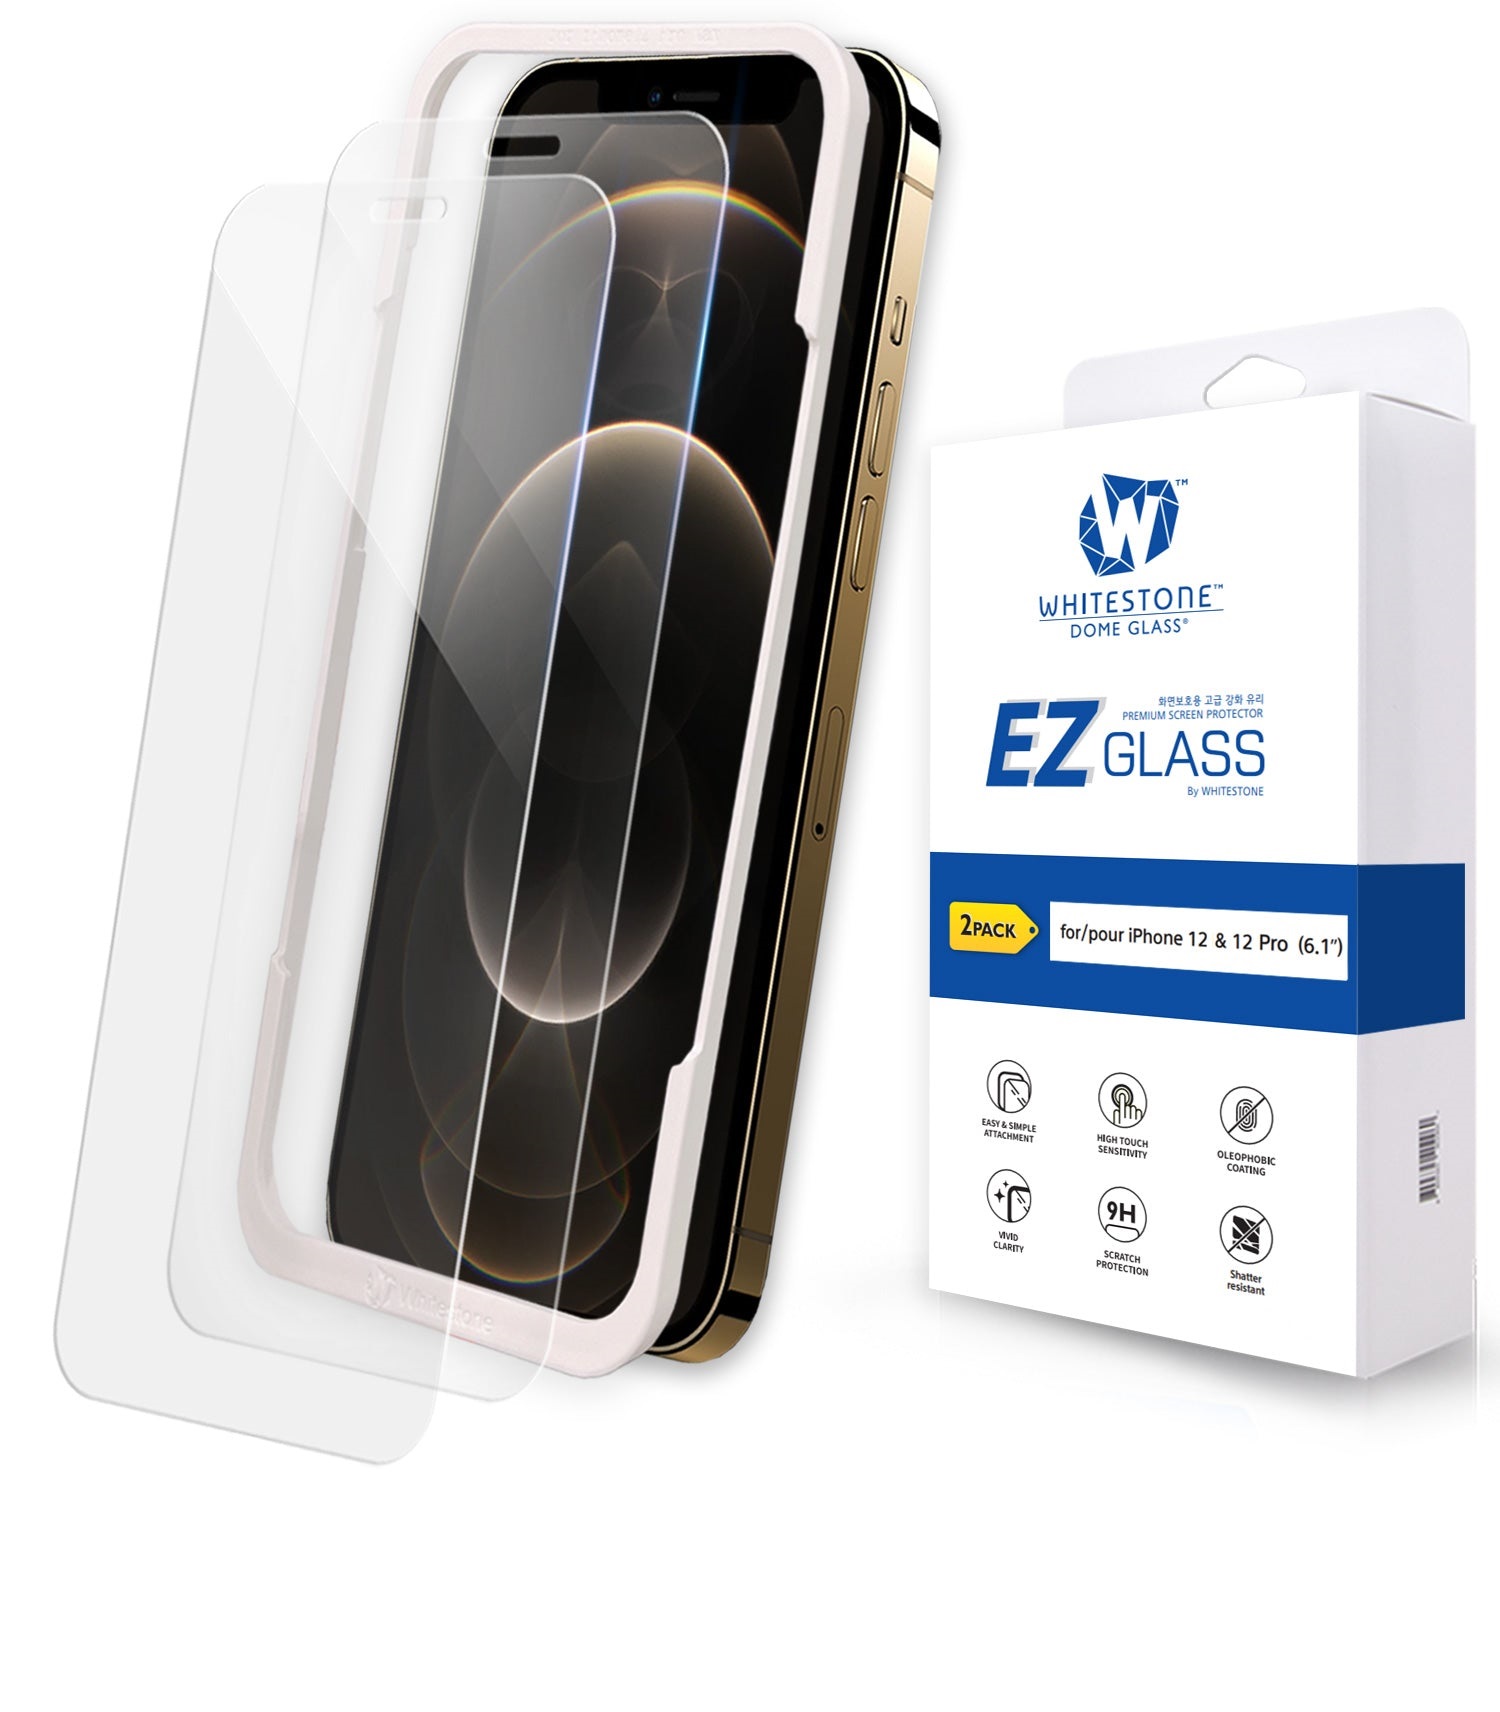 Whitestone EZ Glass (2packs) | iPhone 12 / 12 Pro